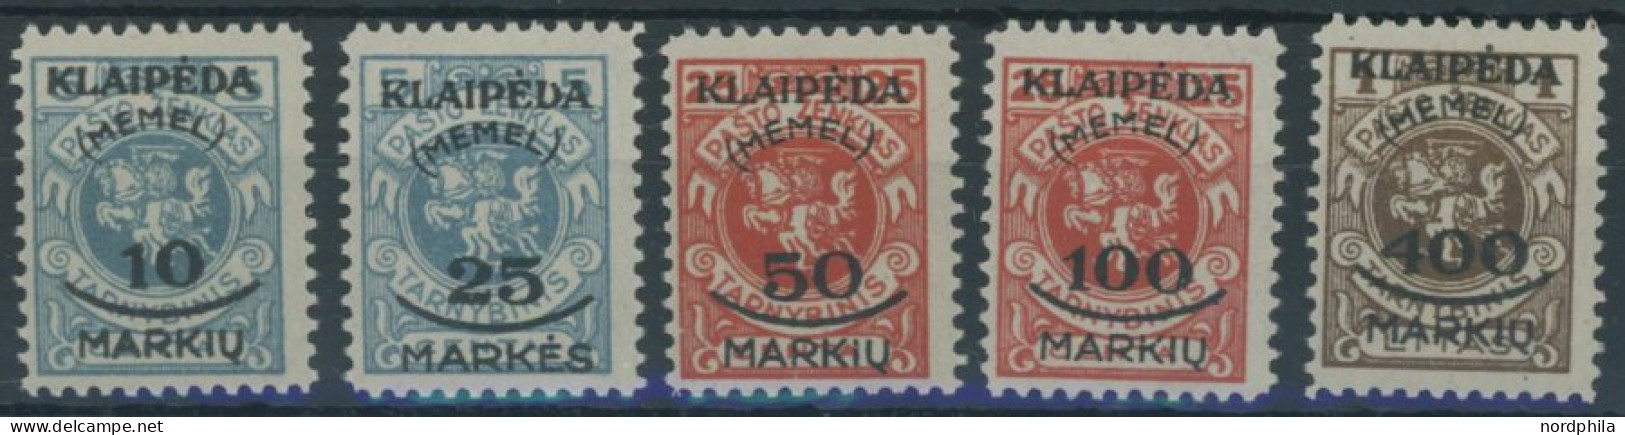 MEMELGEBIET 124-28 , 1923, Staatsdruckerei Kowno, Postfrisch, Prachtsatz, Mi. 120.- - Memel (Klaïpeda) 1923